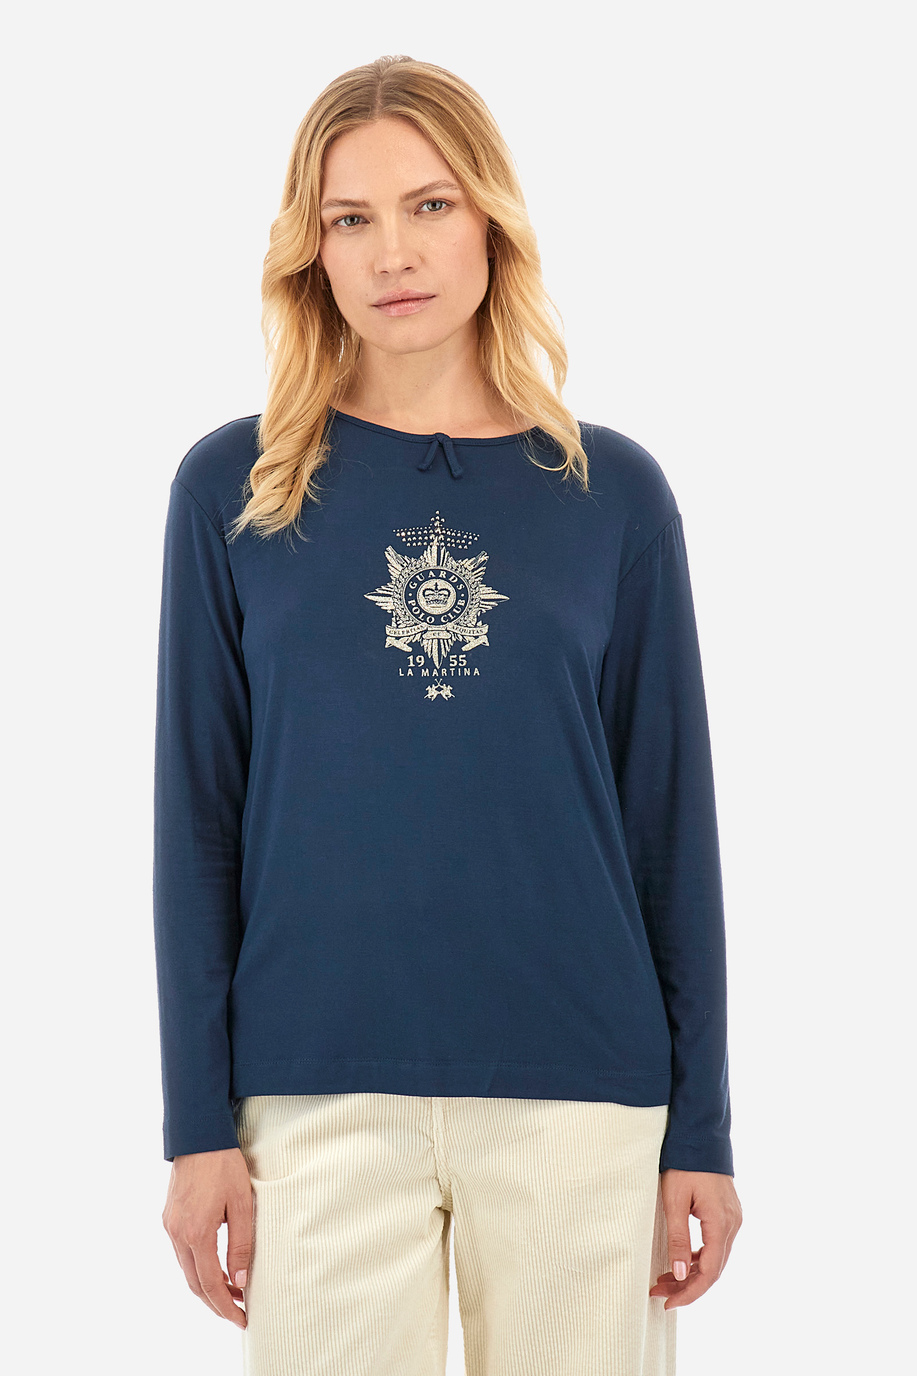 Tee-shirt femme coupe classique - Wyetta - T-shirts | La Martina - Official Online Shop